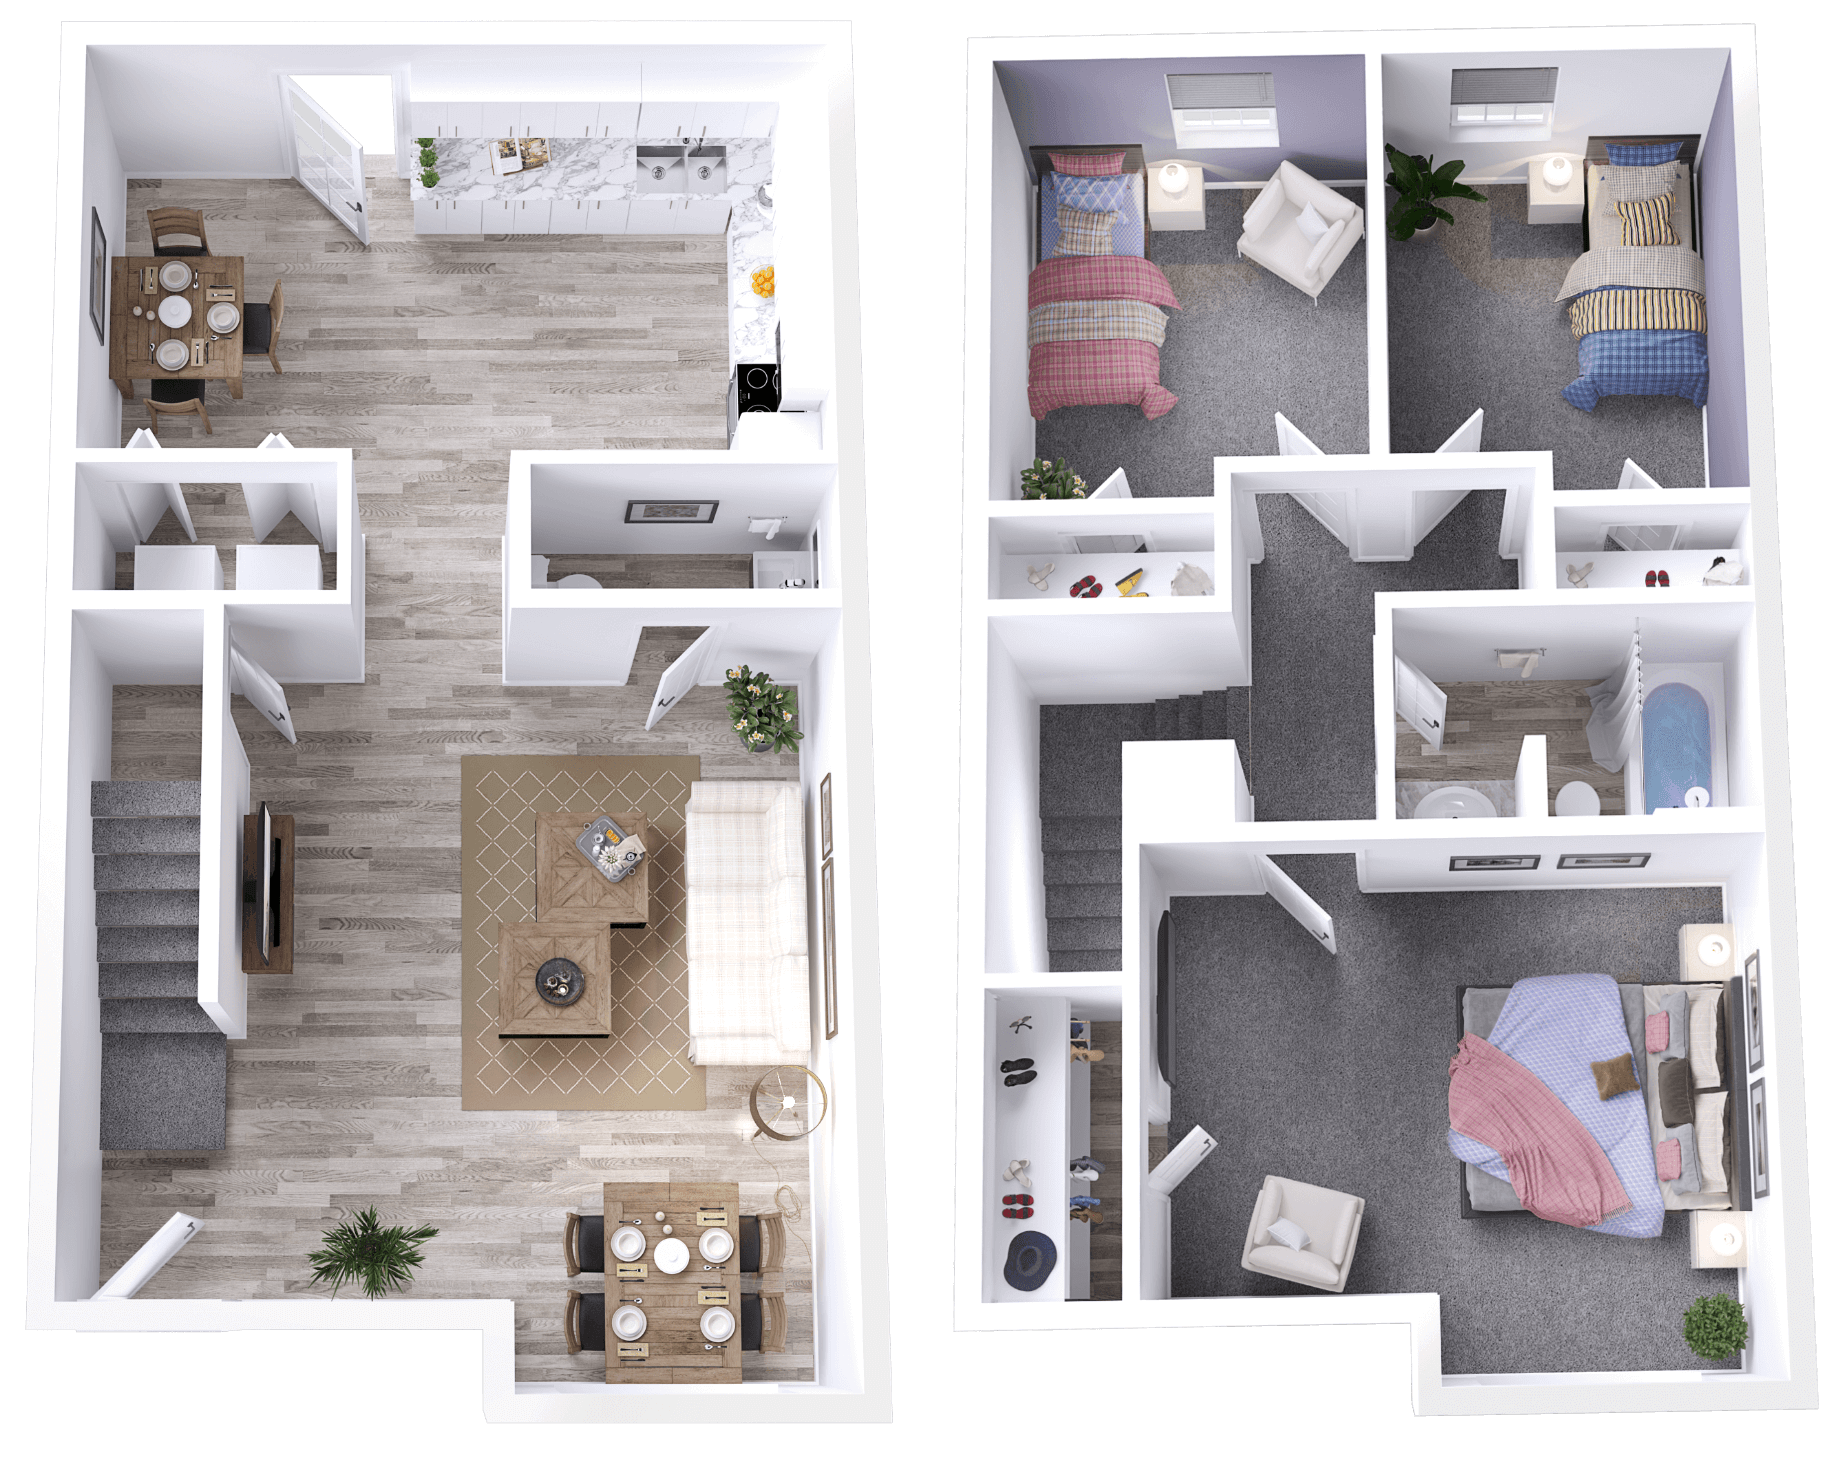 OakLawn Heights 3 bedroom floorplan